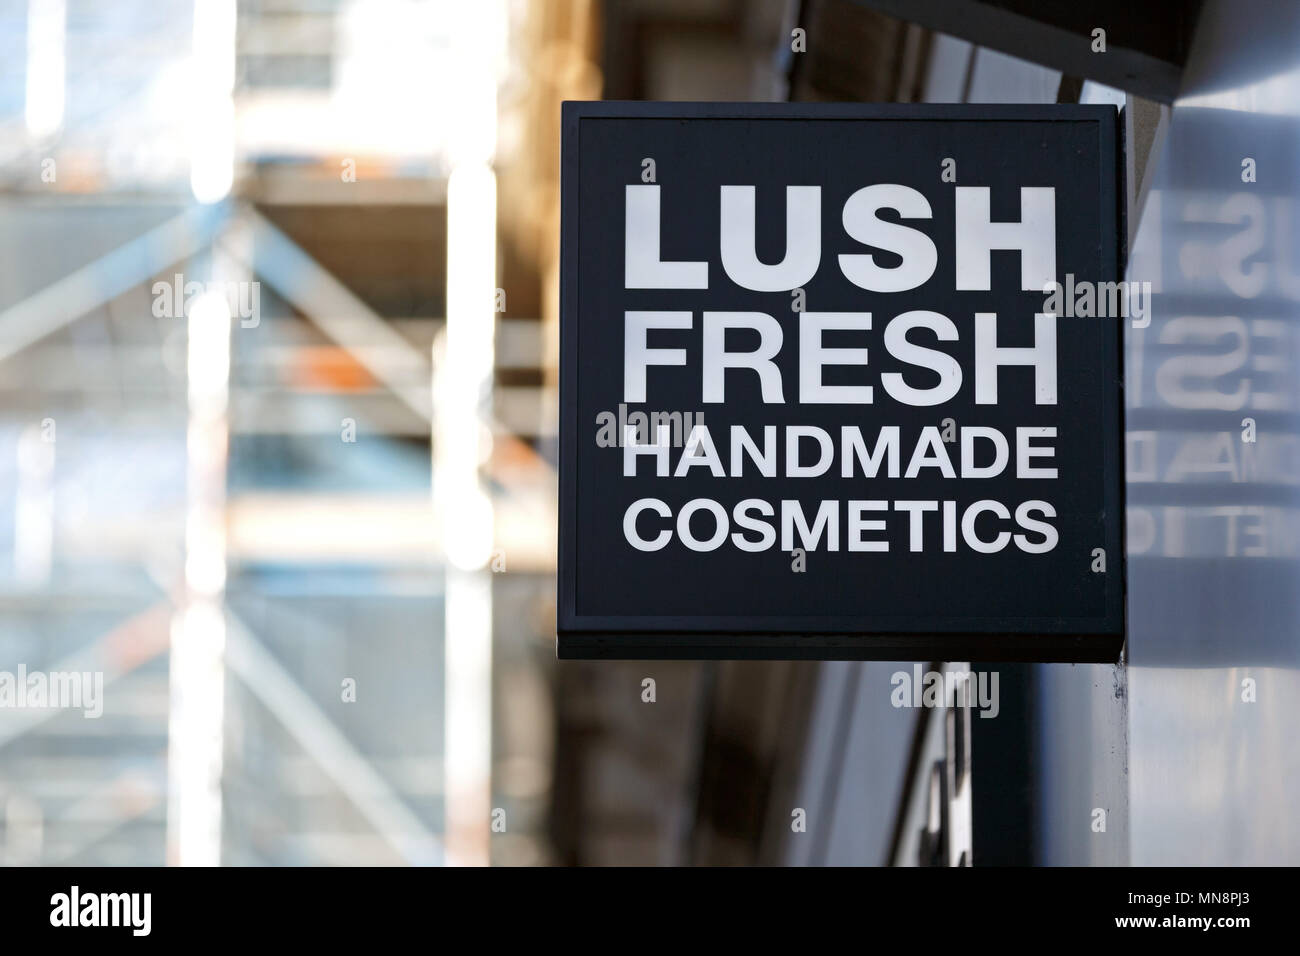 lush logo - Google Search  Lush cosmetics, Handmade cosmetics, Lush  products